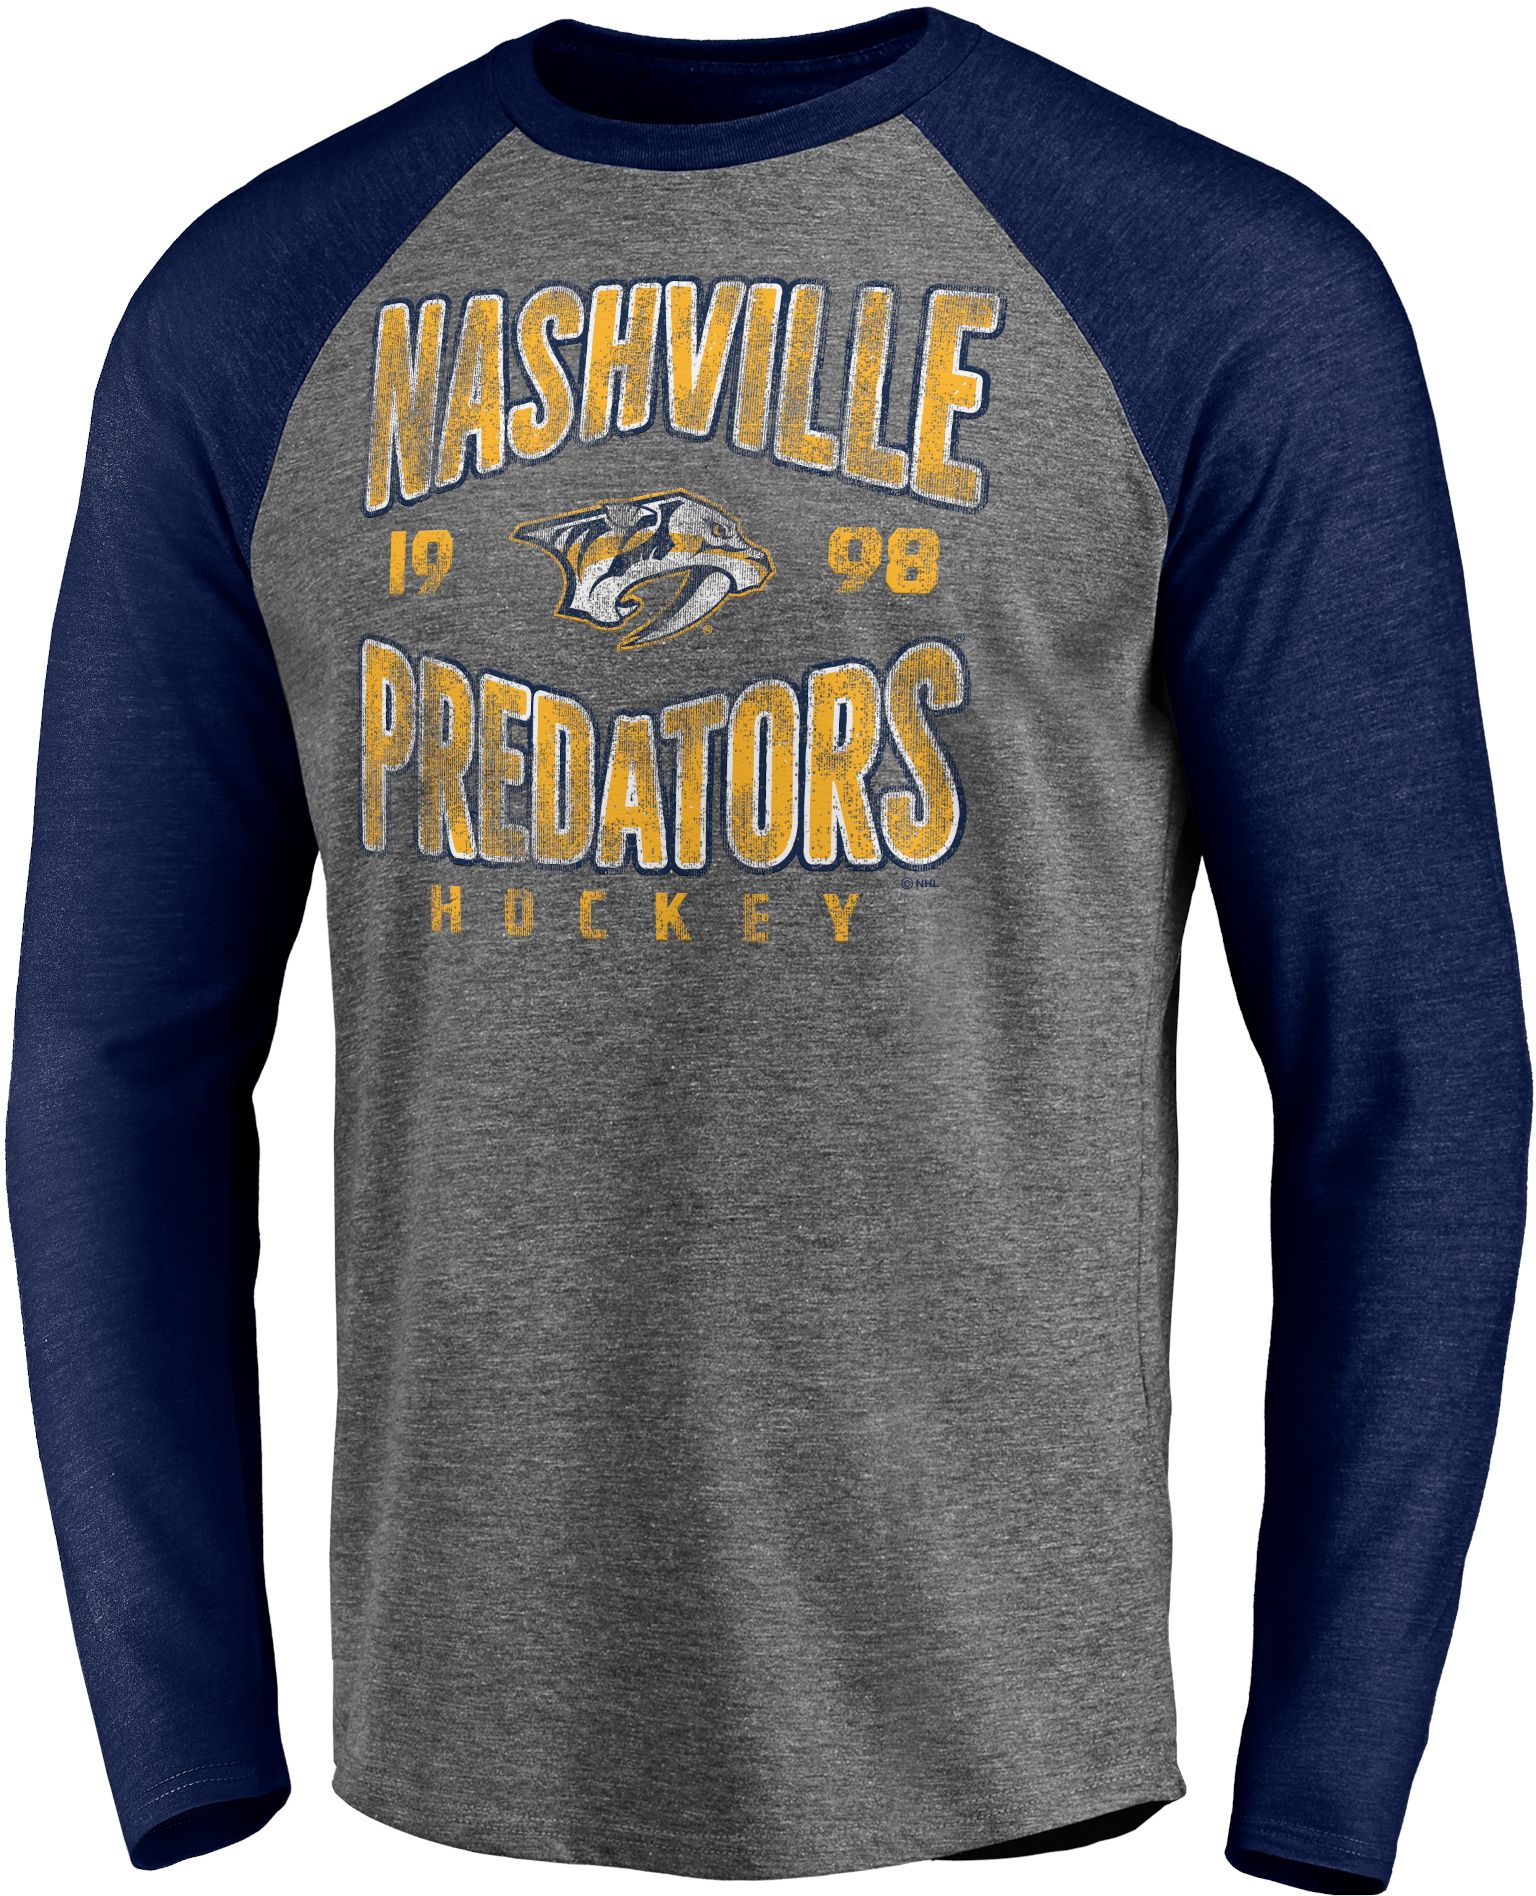 Men's Fanatics Branded Heather Charcoal Nashville Predators Stacked Long Sleeve Hoodie T-Shirt